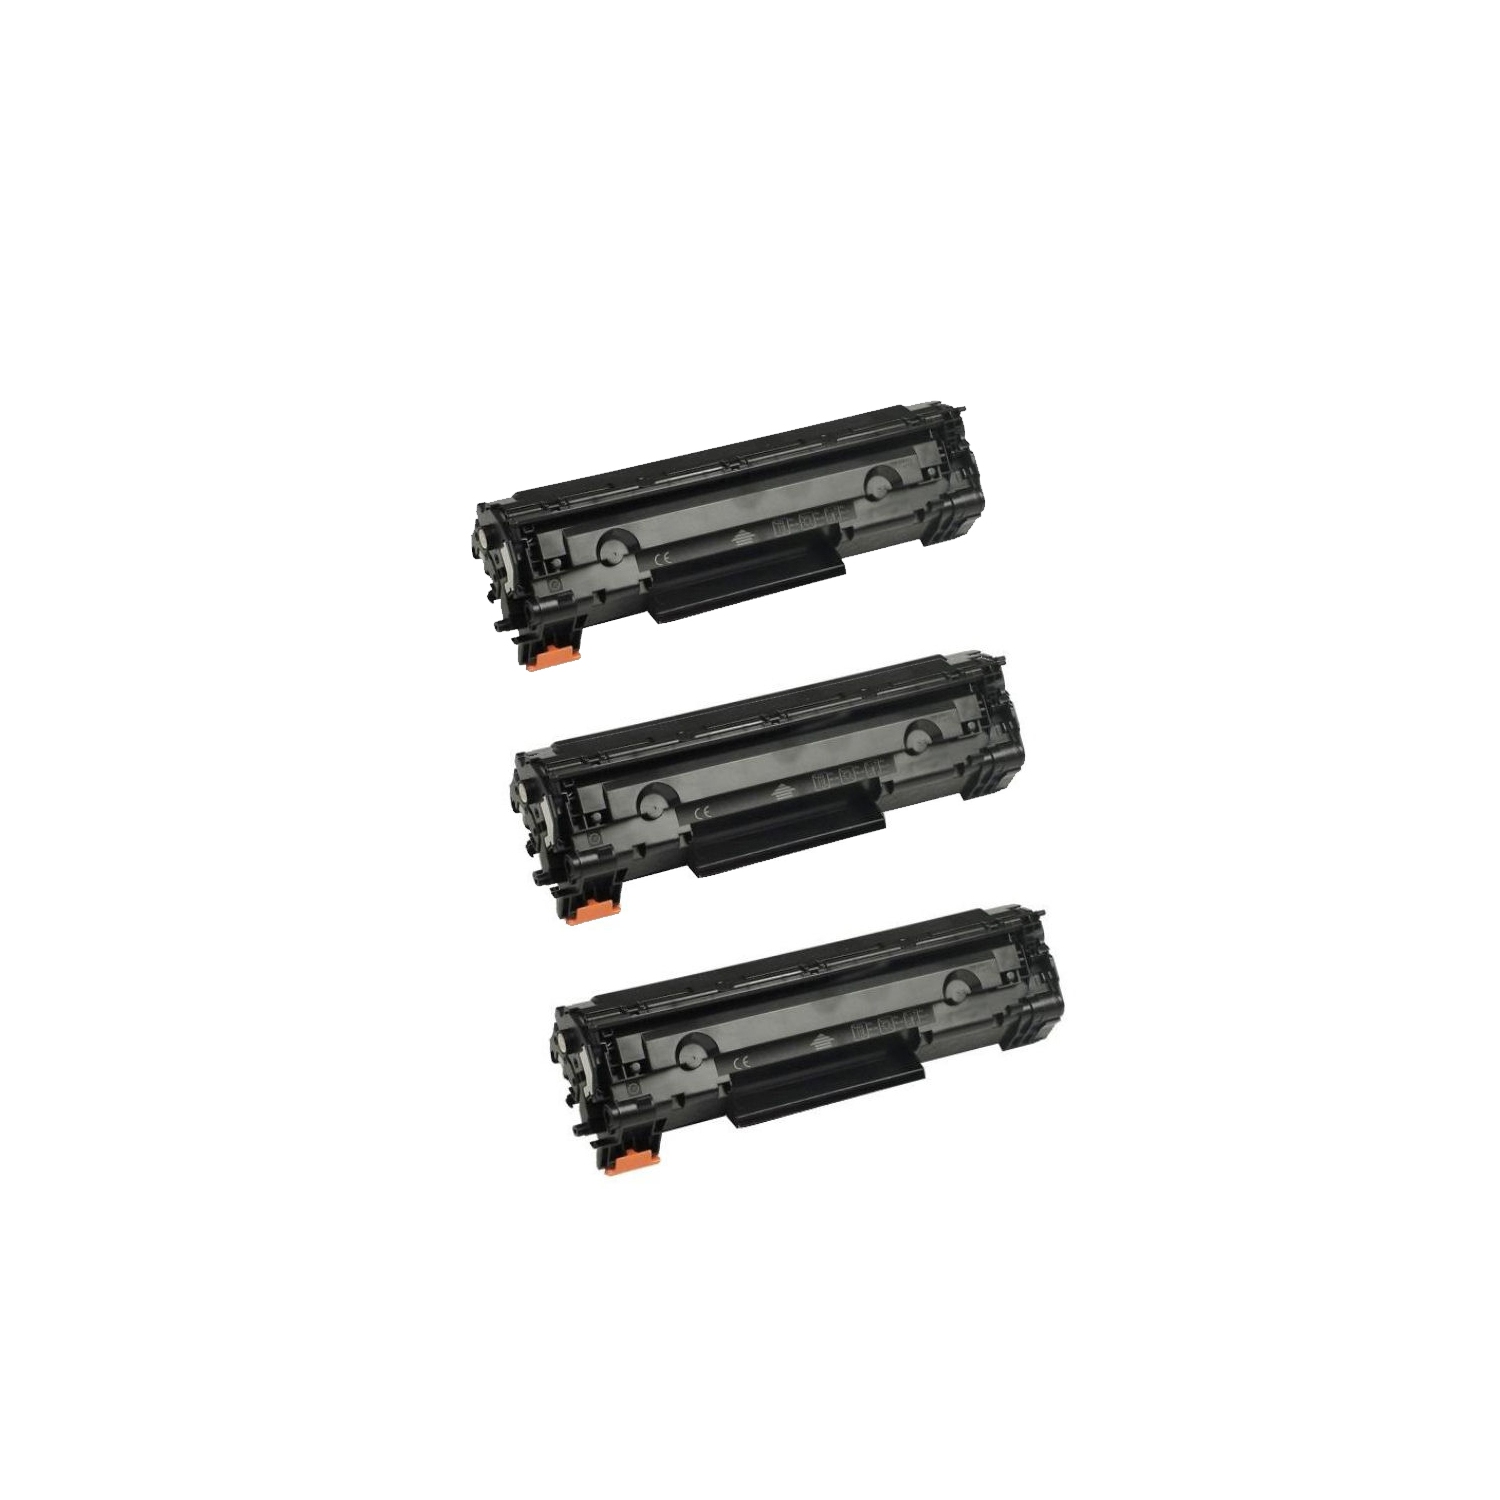 3 Pack CF279A Toner Cartridges Compatible for HP 79A CF279A LaserJet Pro MFP M26a MFP M26nw M12a M12w